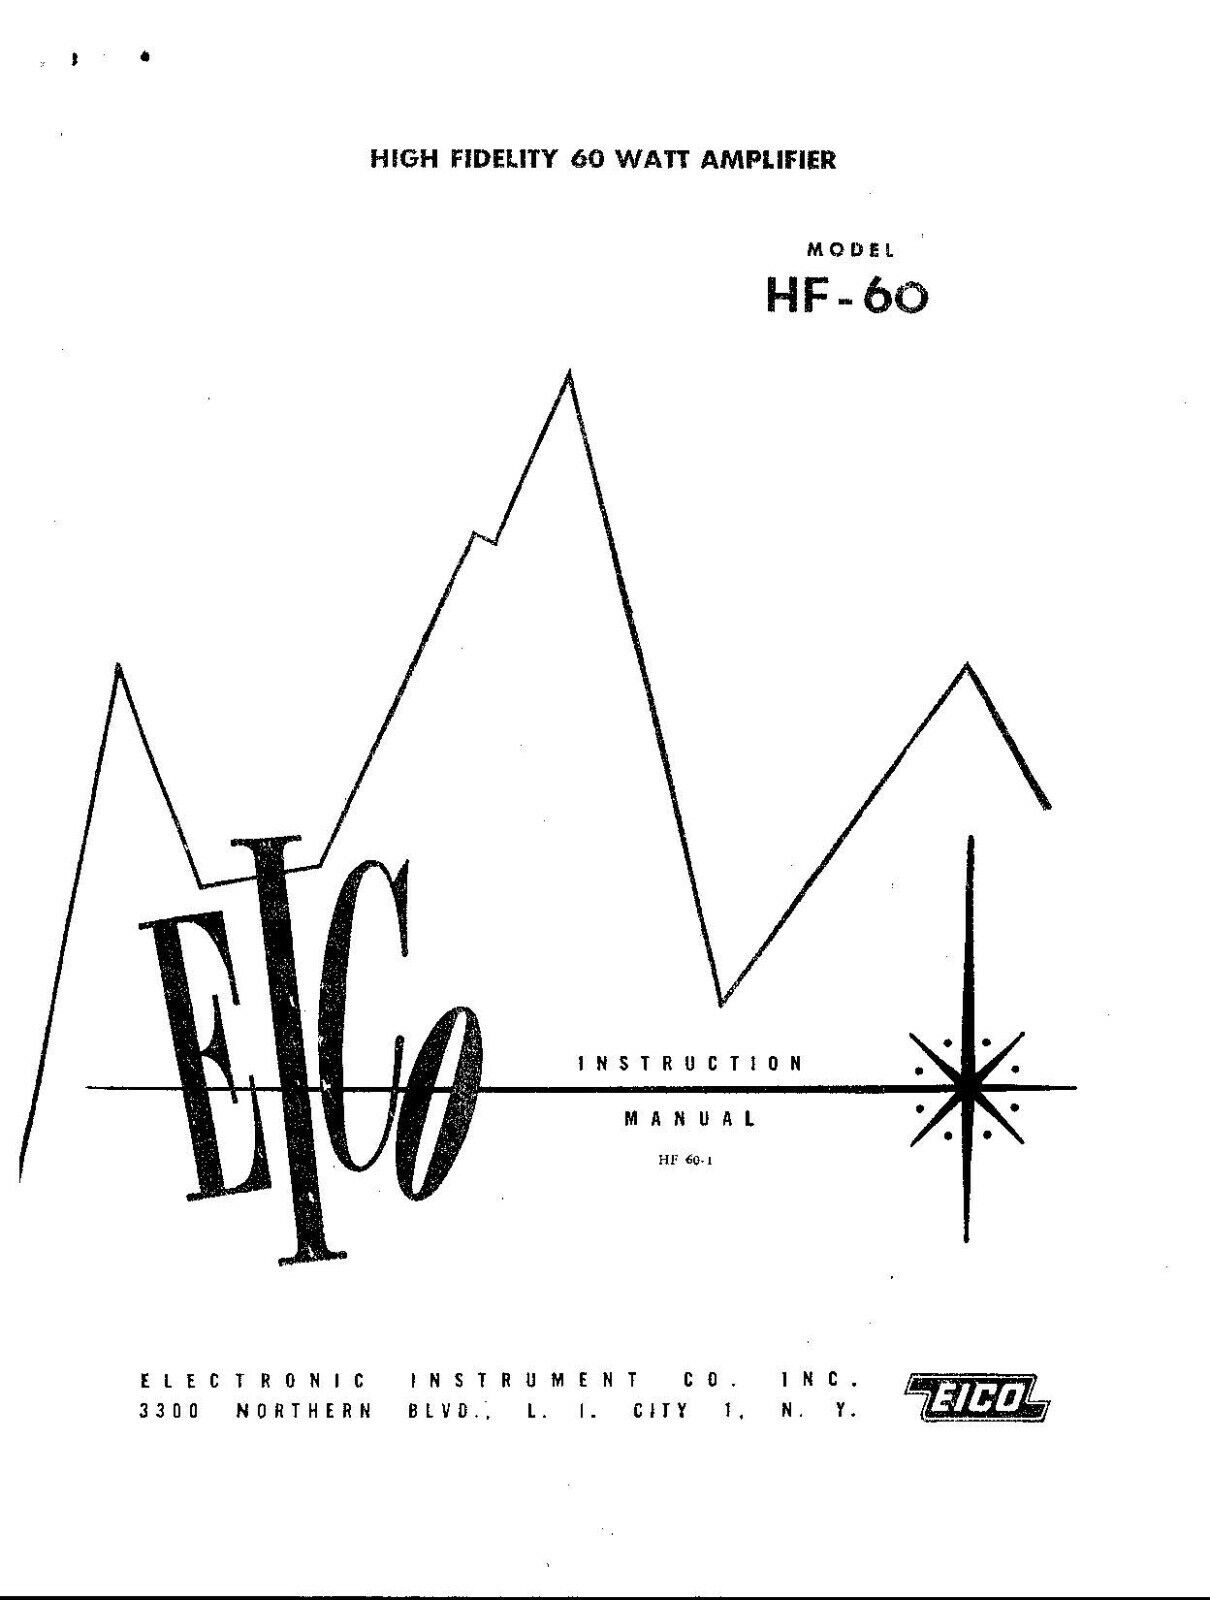 Watt Amplifier Owners Instruction Manual Fits Eico HF-60